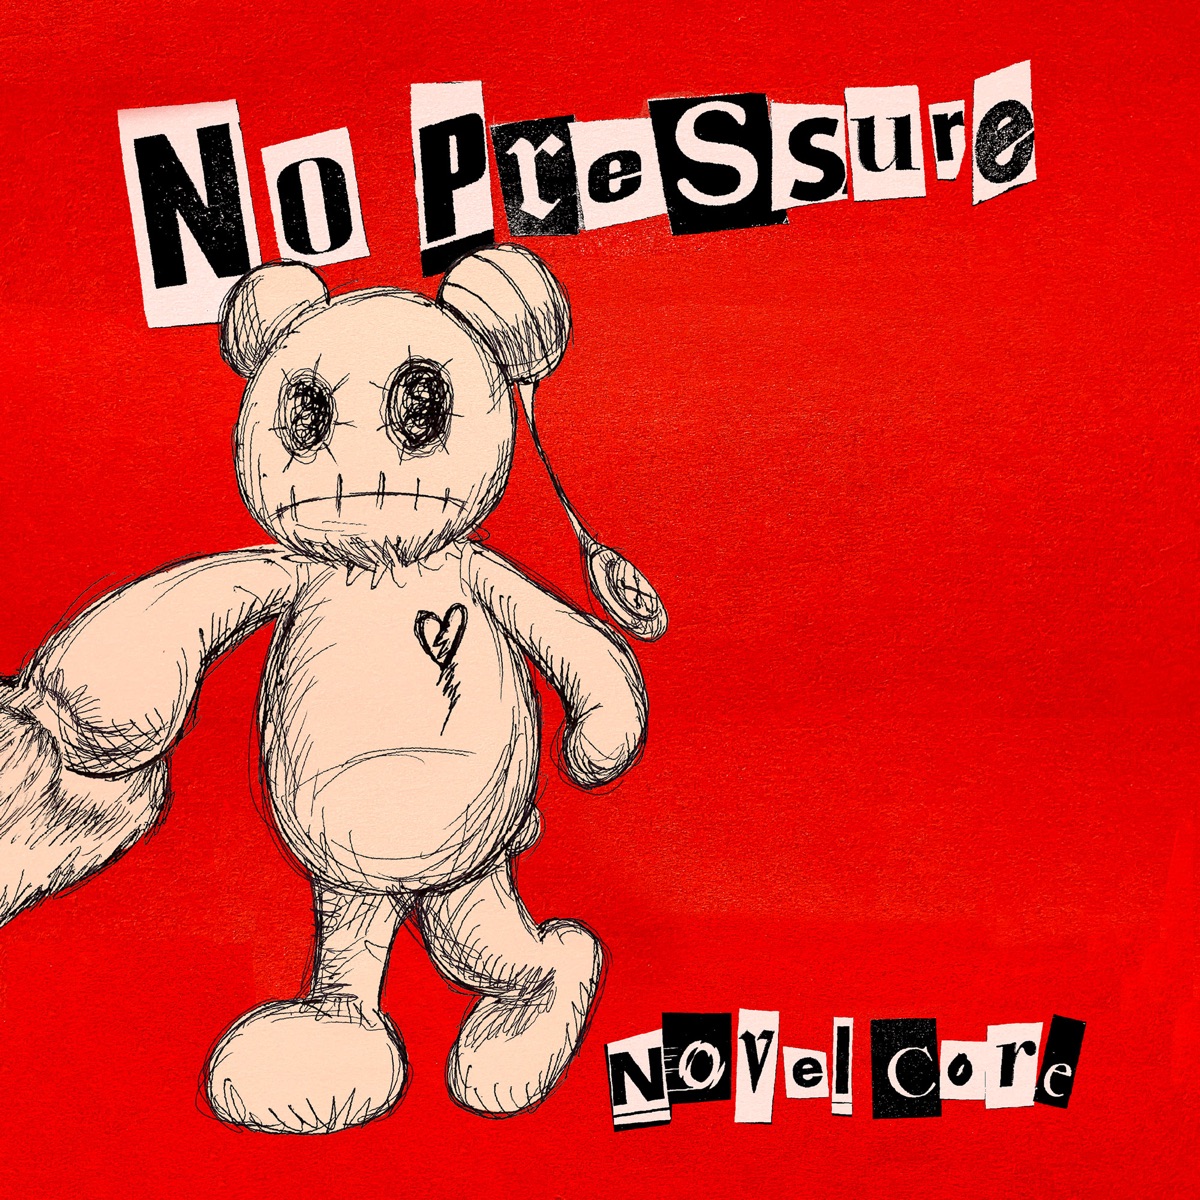 『Novel Core - JUST NOISE』収録の『No Pressure』ジャケット